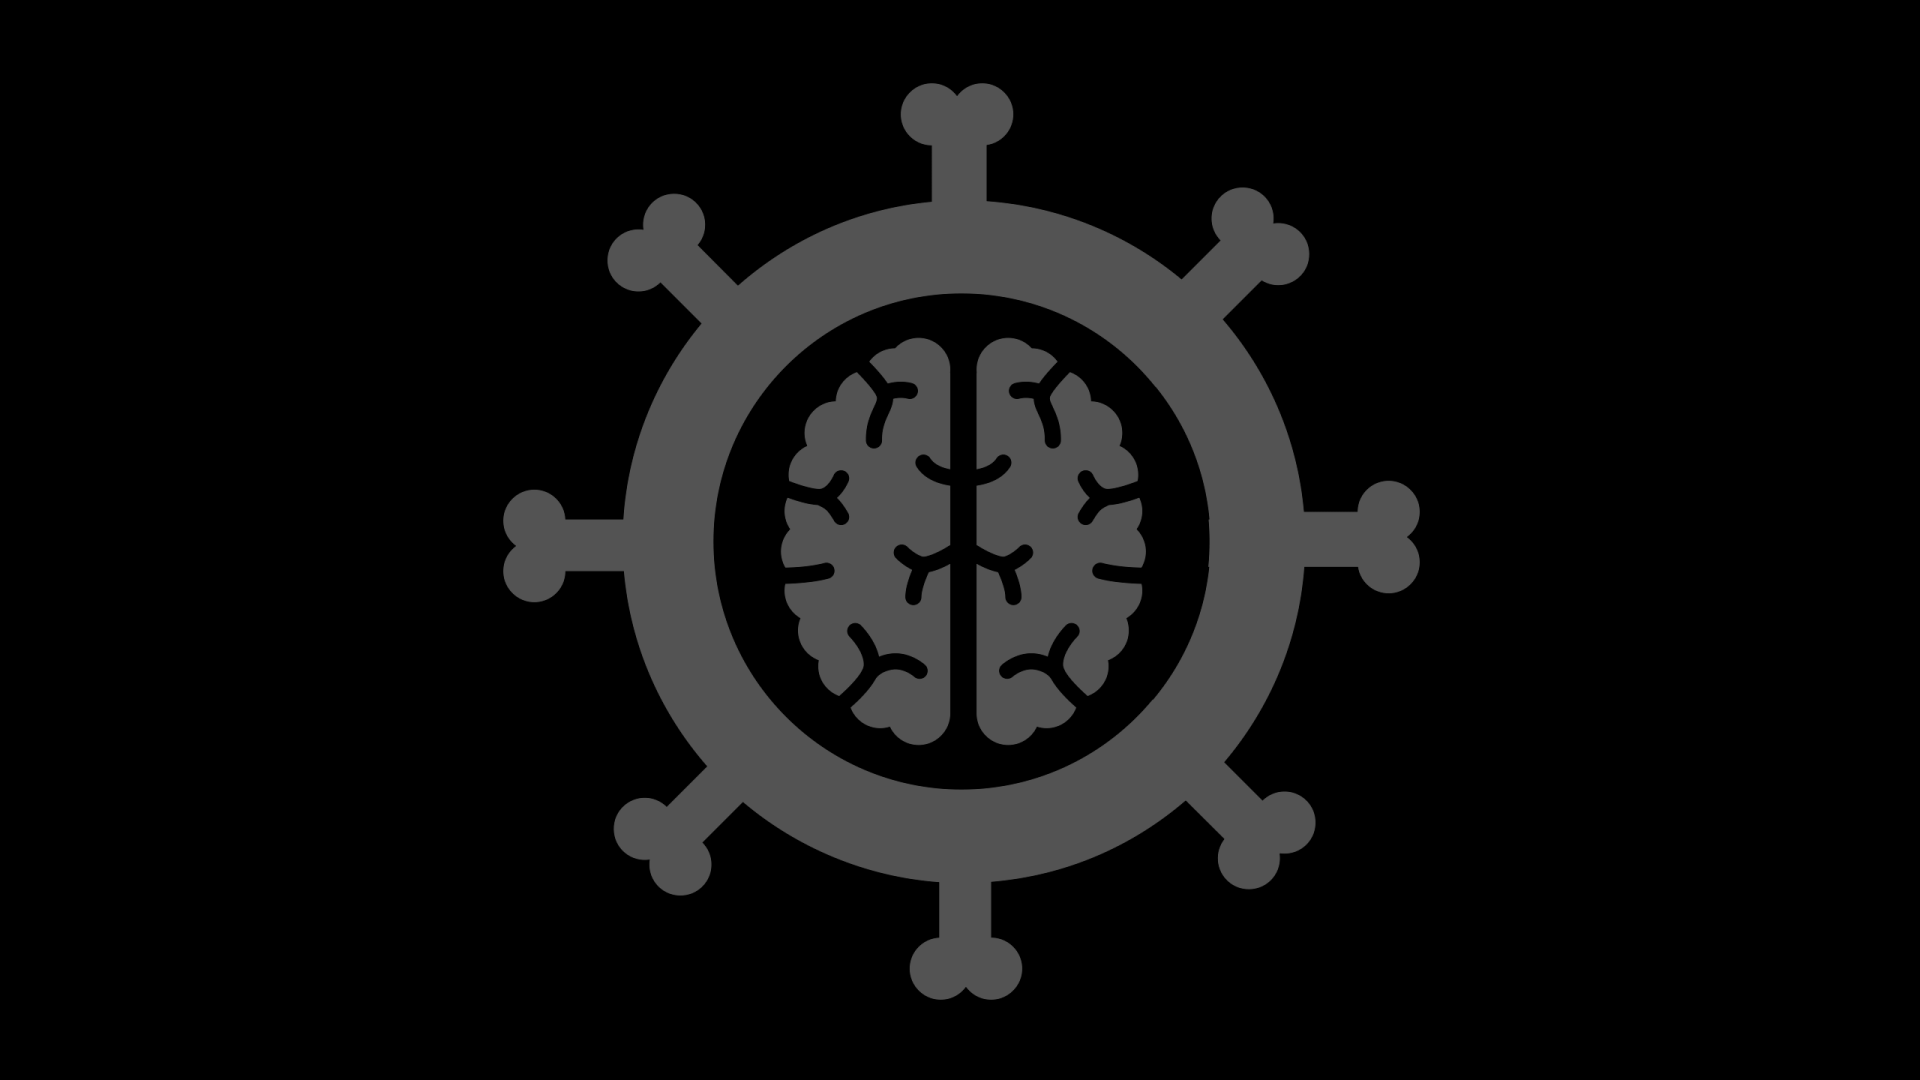 Breinpiraten logo